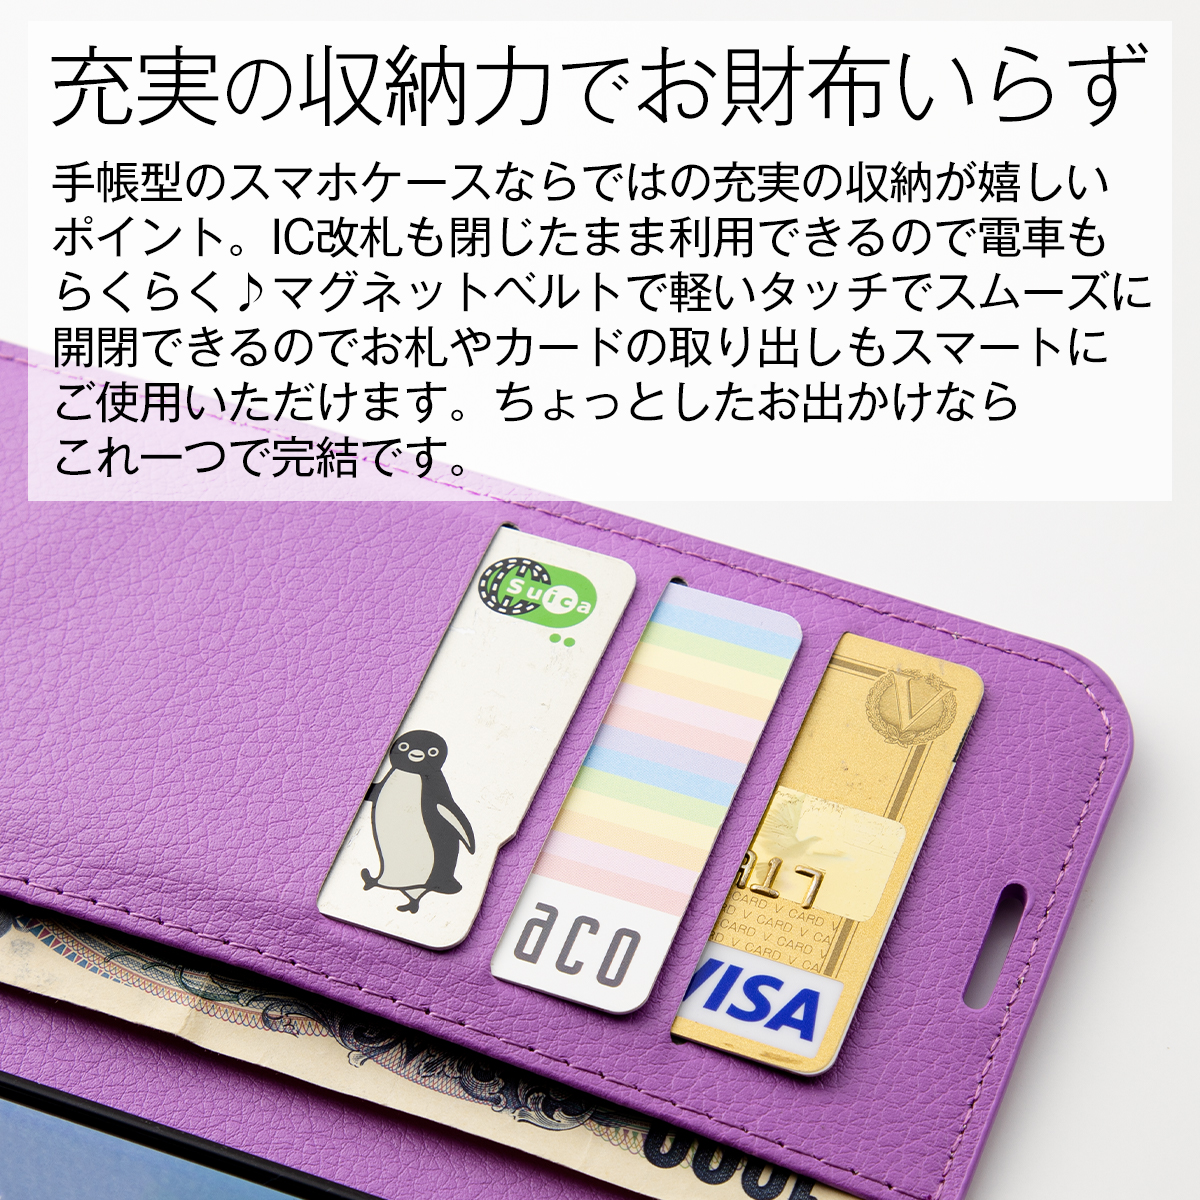 Xiaomi Mi Note 10 レザー手帳型ケース